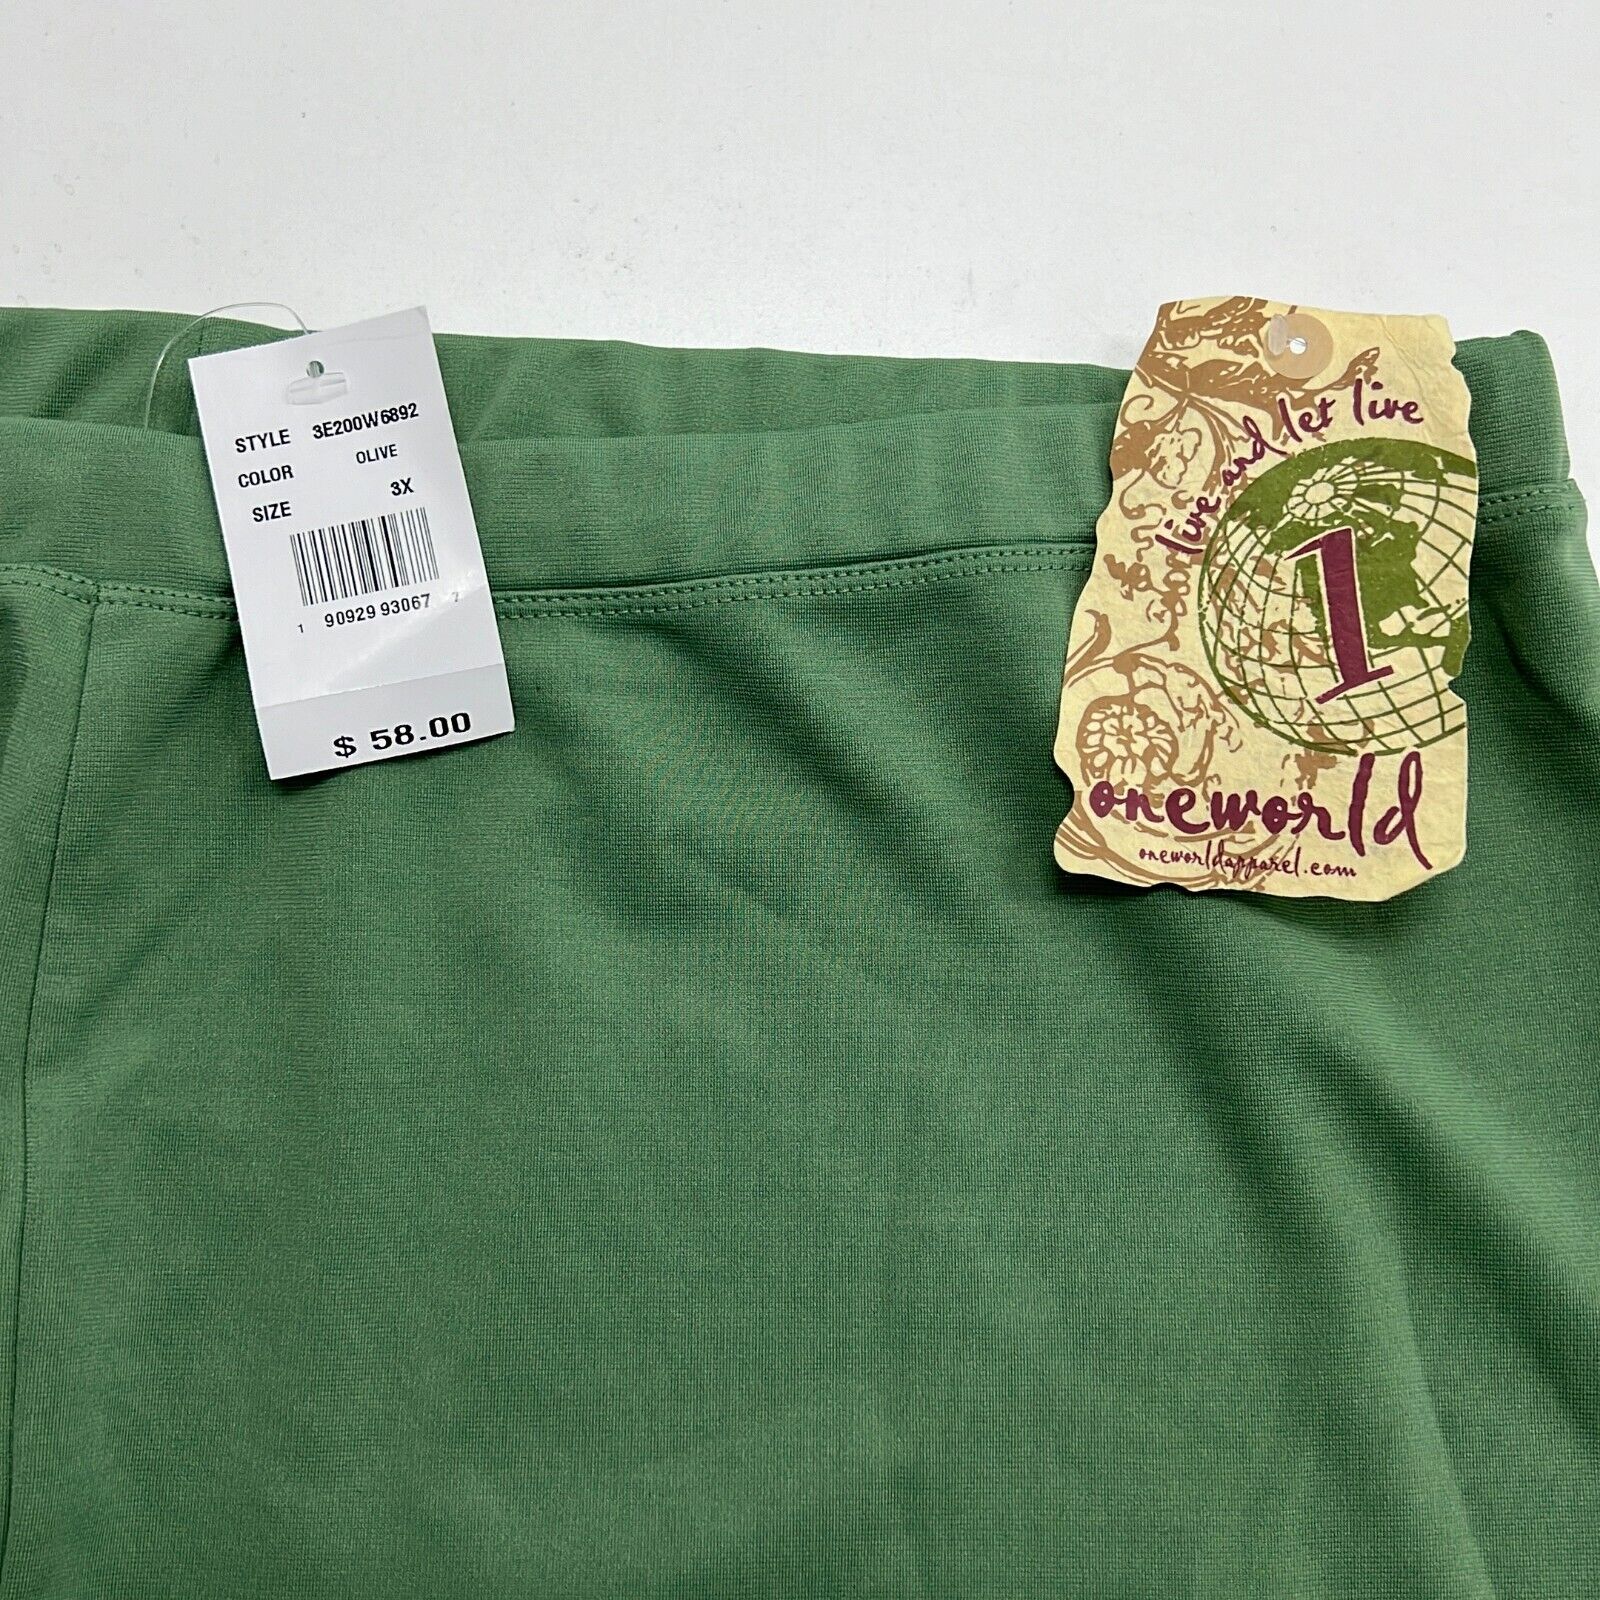 NWT One World Women's Green Flat Front Elastic Waist Pull On Capri Pants Size 3X